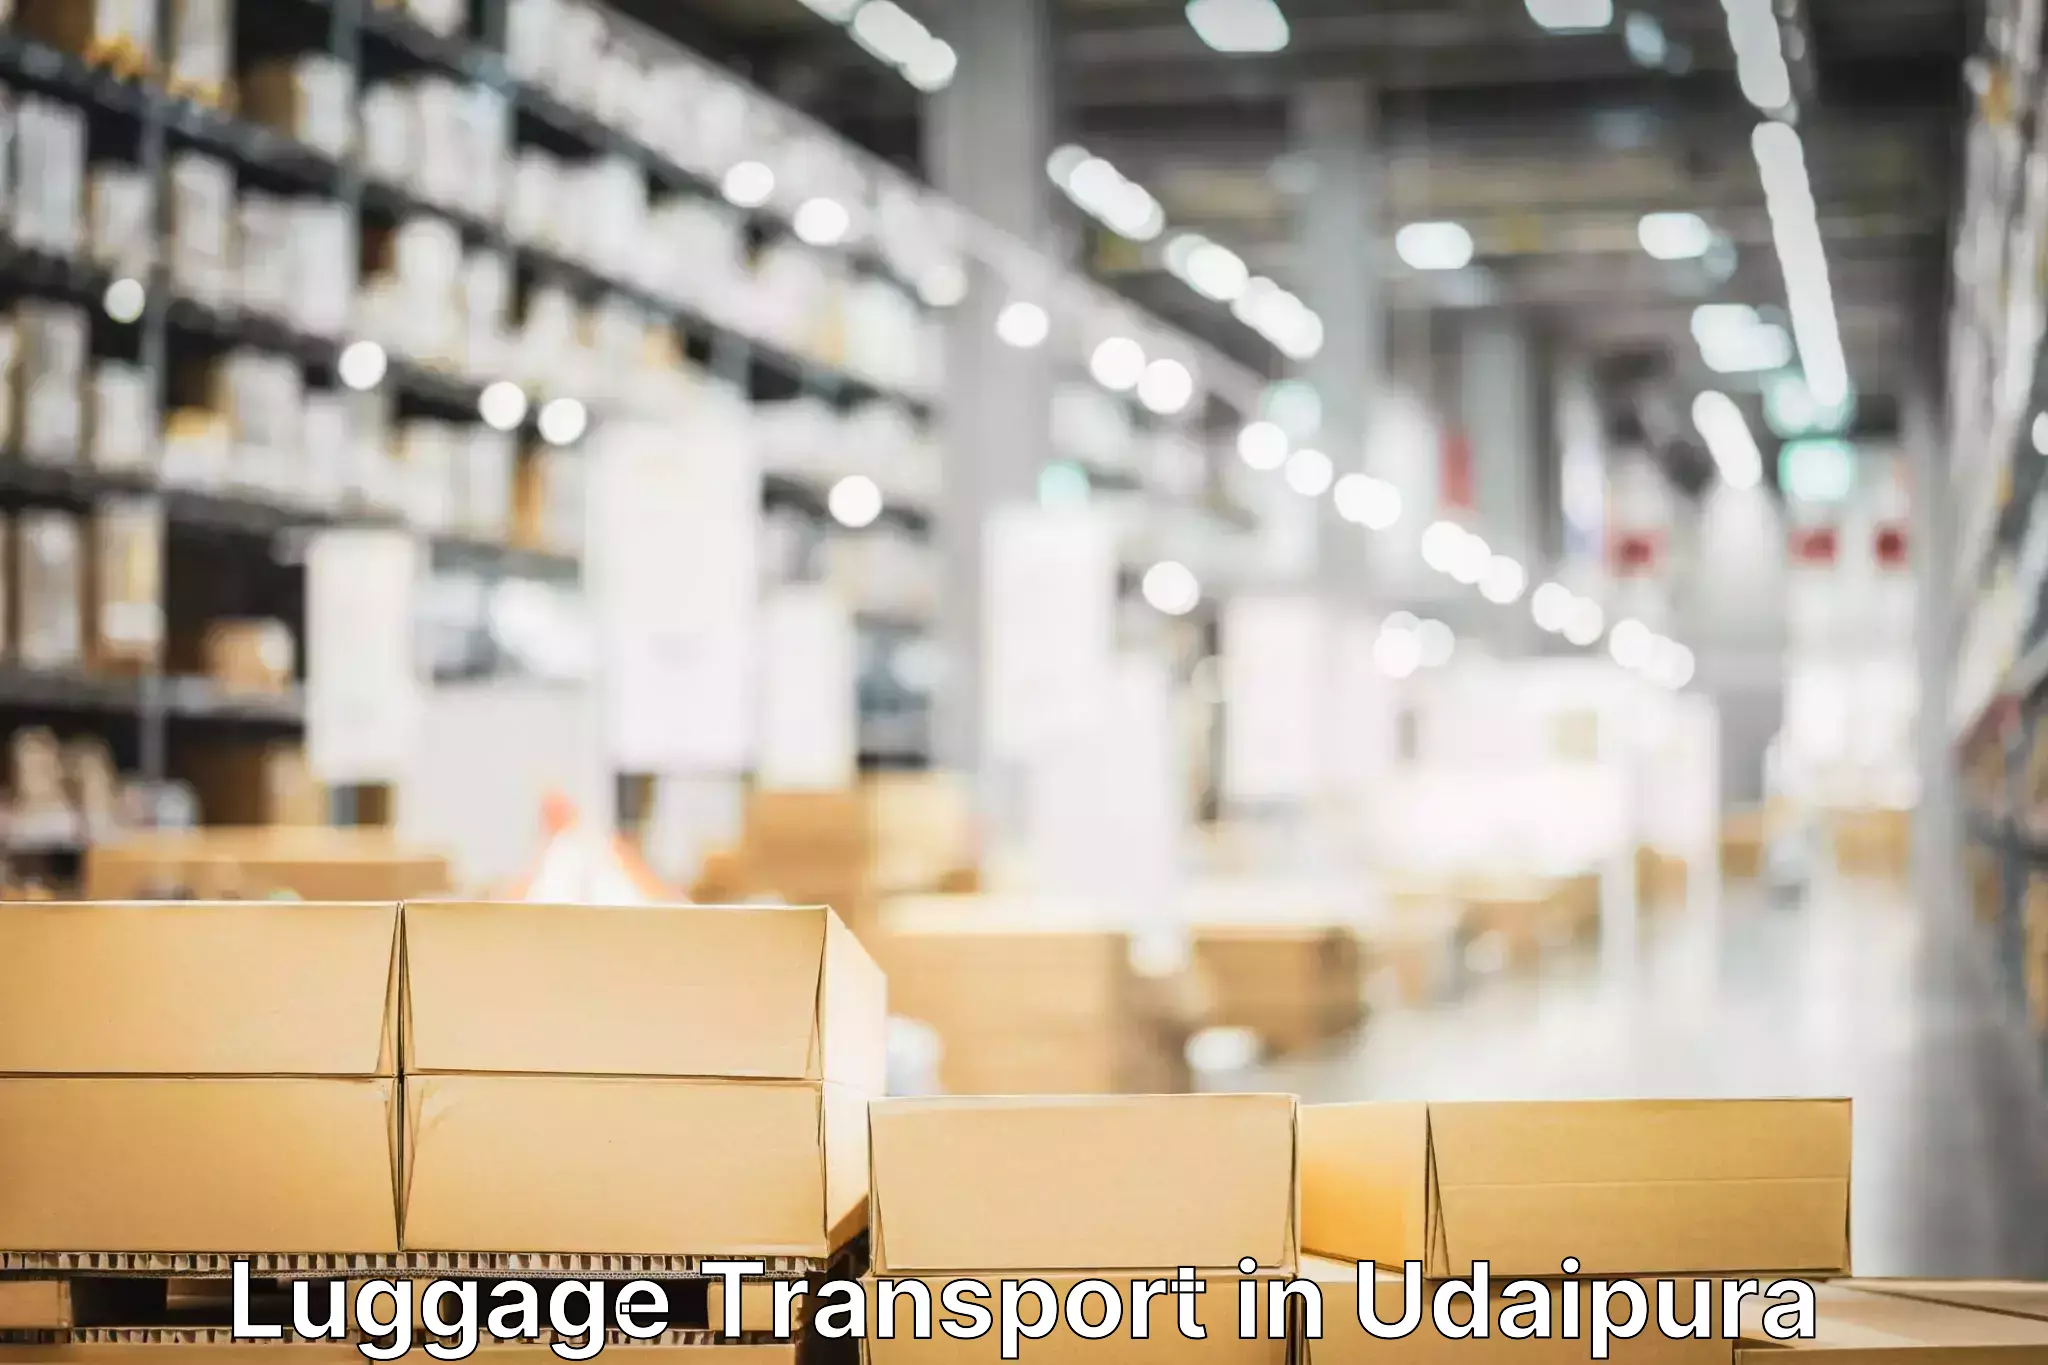 Luggage transport service in Udaipura